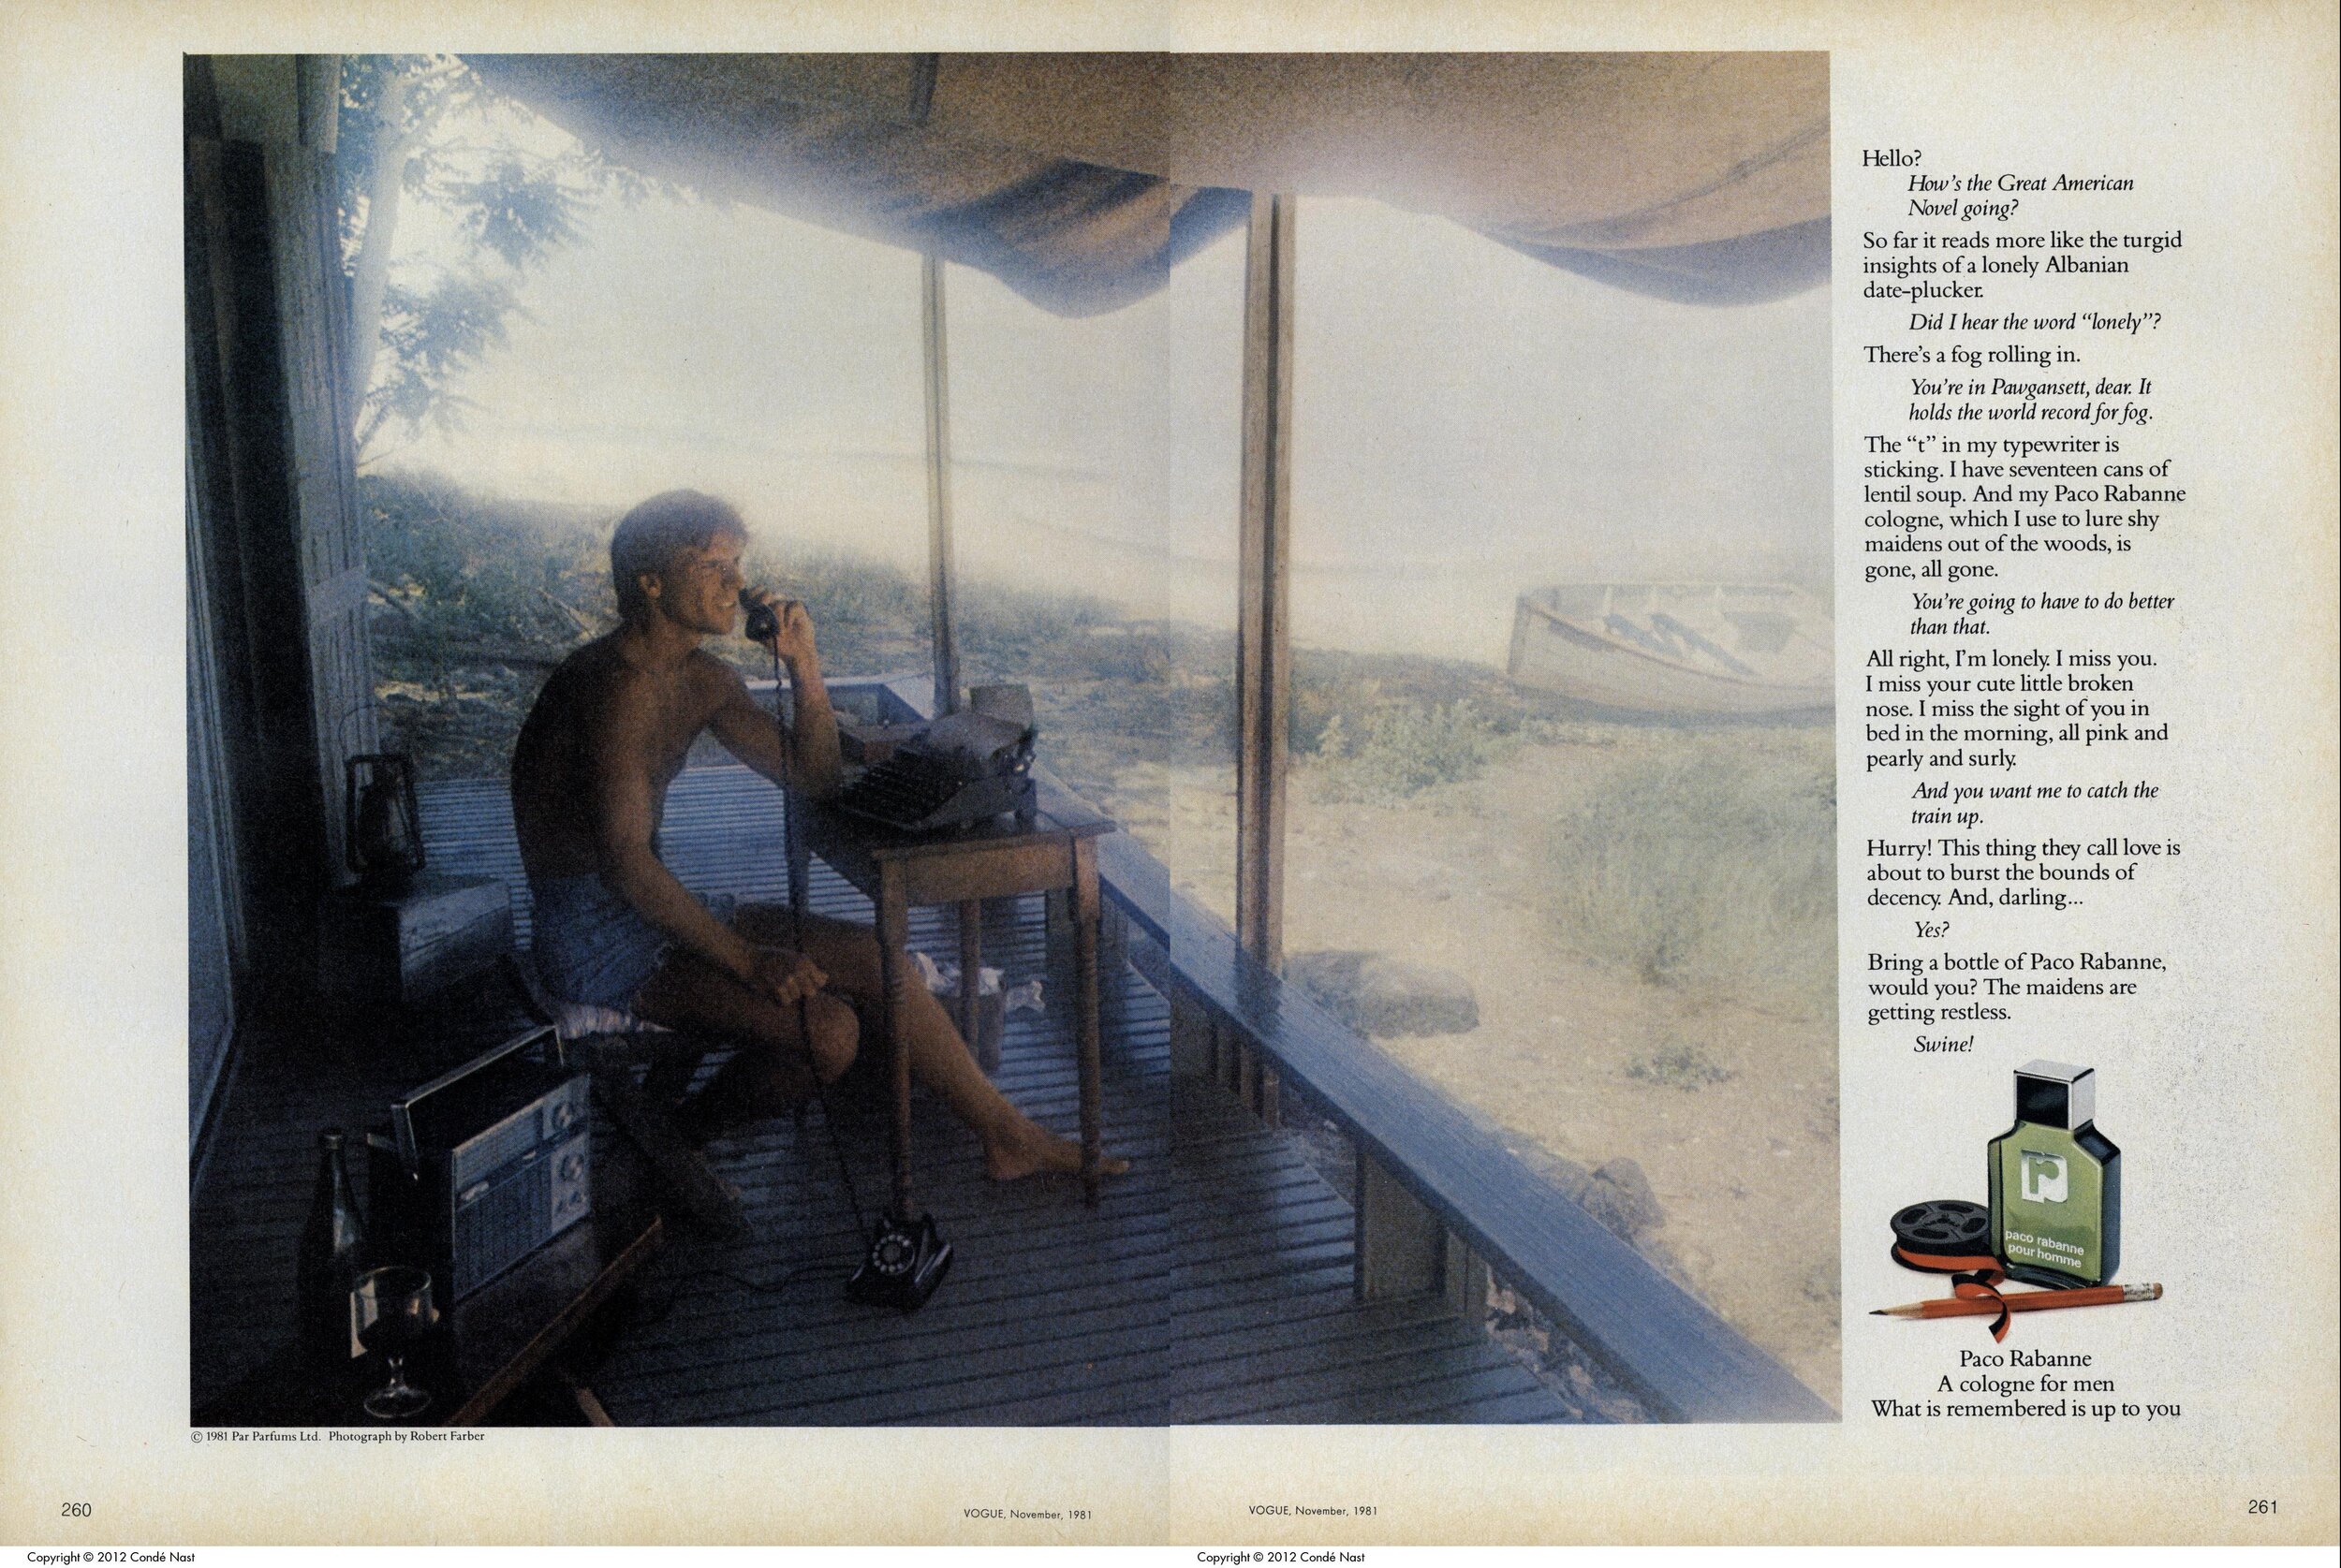 Vogue (Nov 1, 1981)_RABANNE_FARBER.jpg